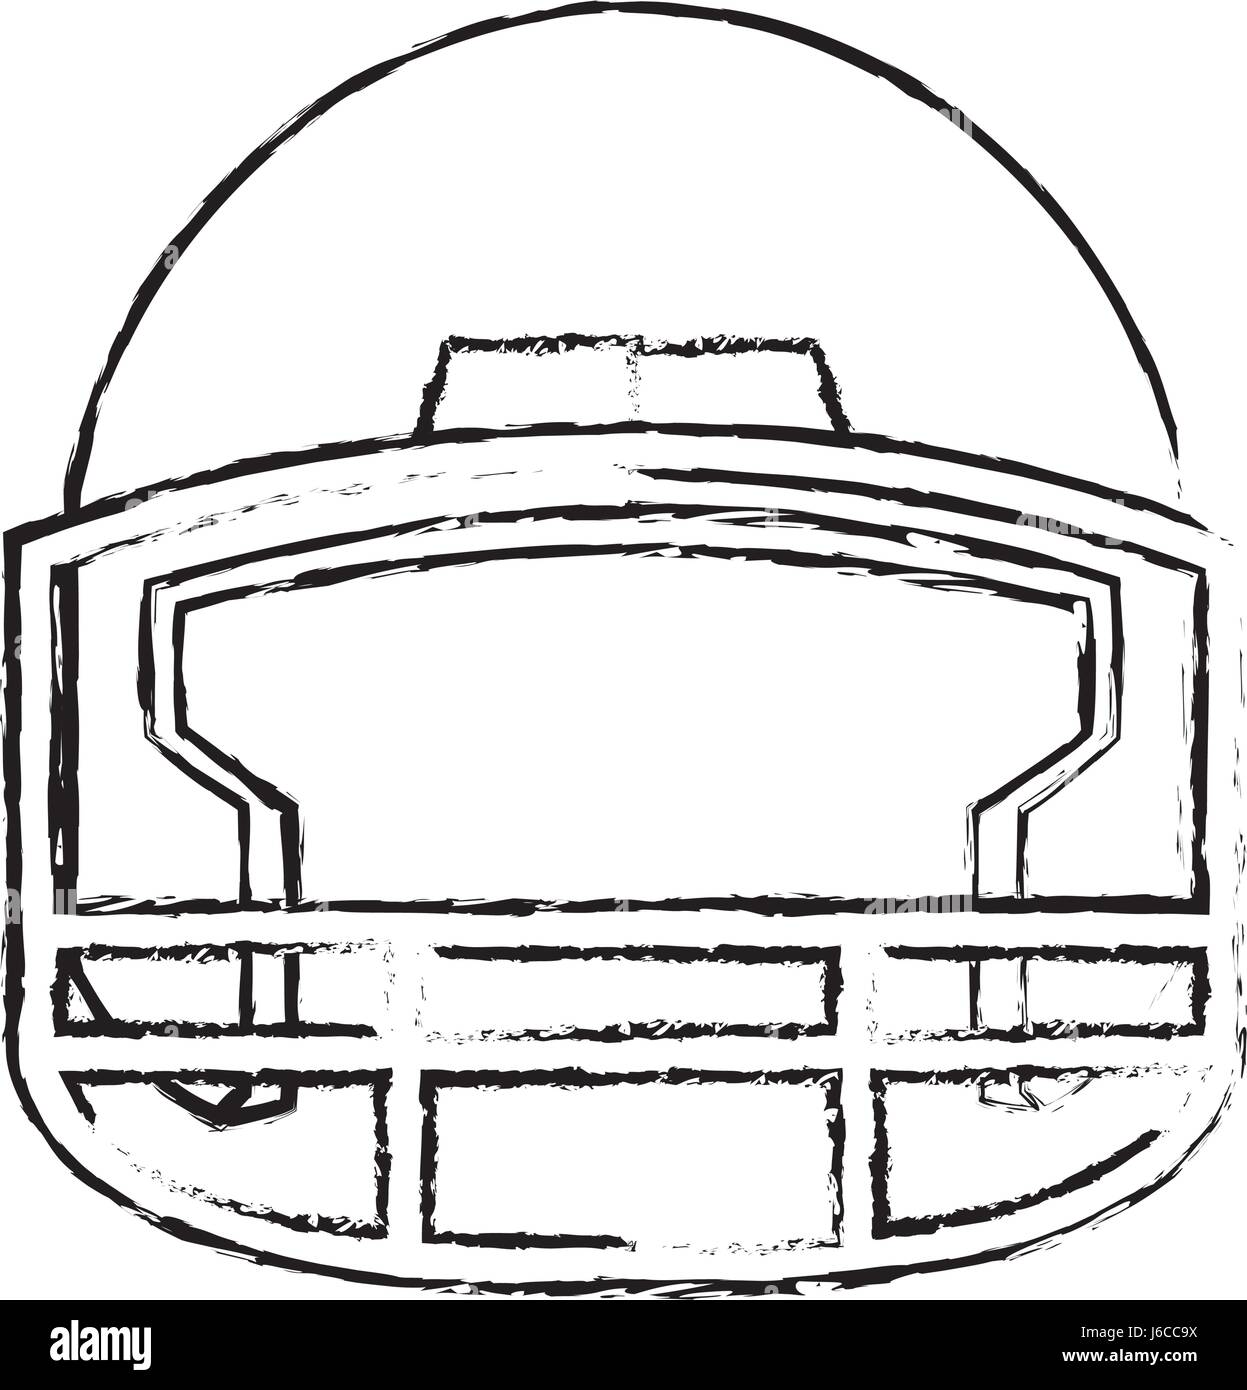 american footbal helmet equipment protection Stock Vector